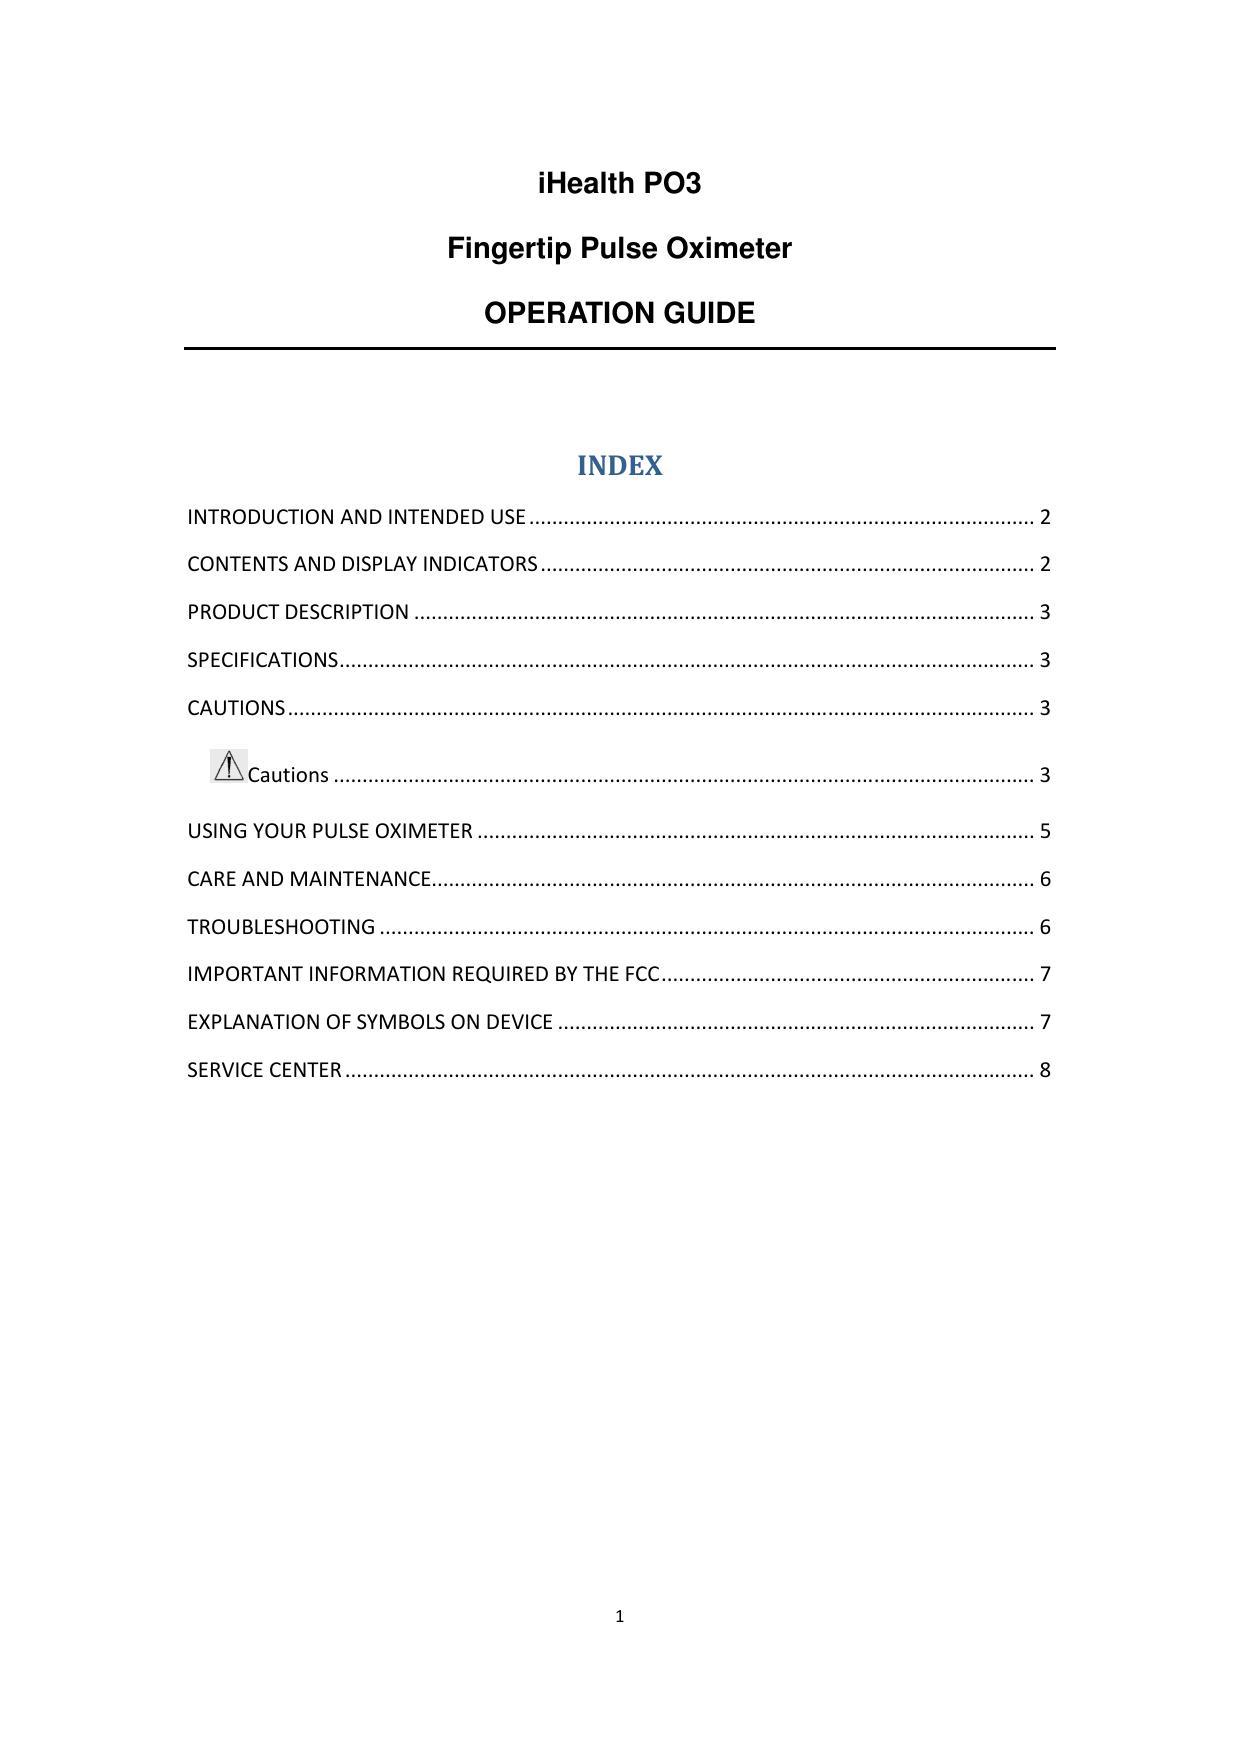 ihealth-po3-fingertip-pulse-oximeter-operation-guide.pdf